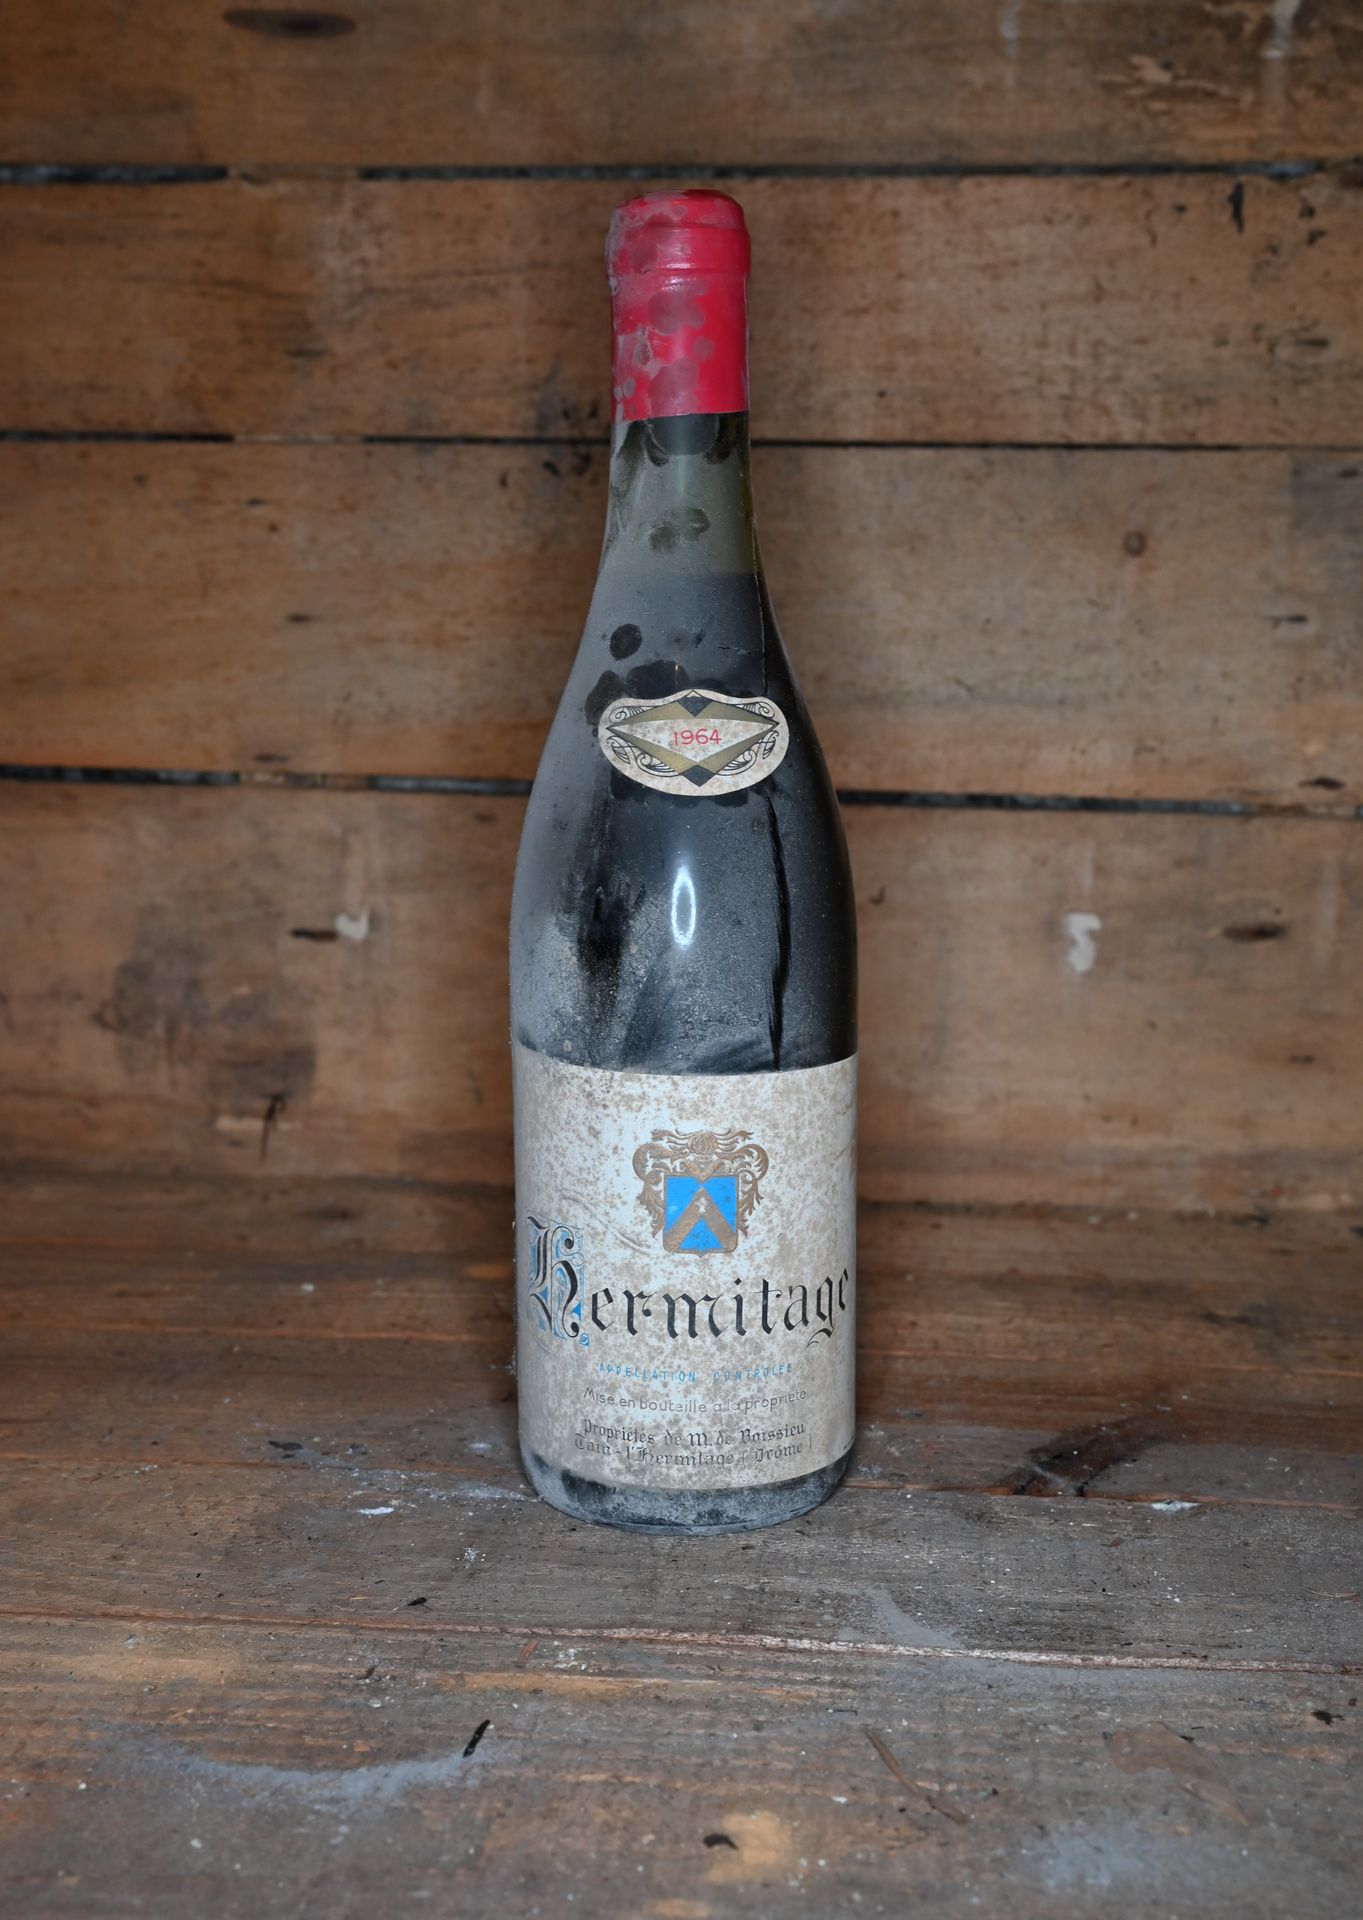 Null 12 瓶 Hermitage 红葡萄酒 Marquis de Buissieu 1964。 

对标签、瓶塞或瓶子或马格南酒瓶的状况不作任何投诉。